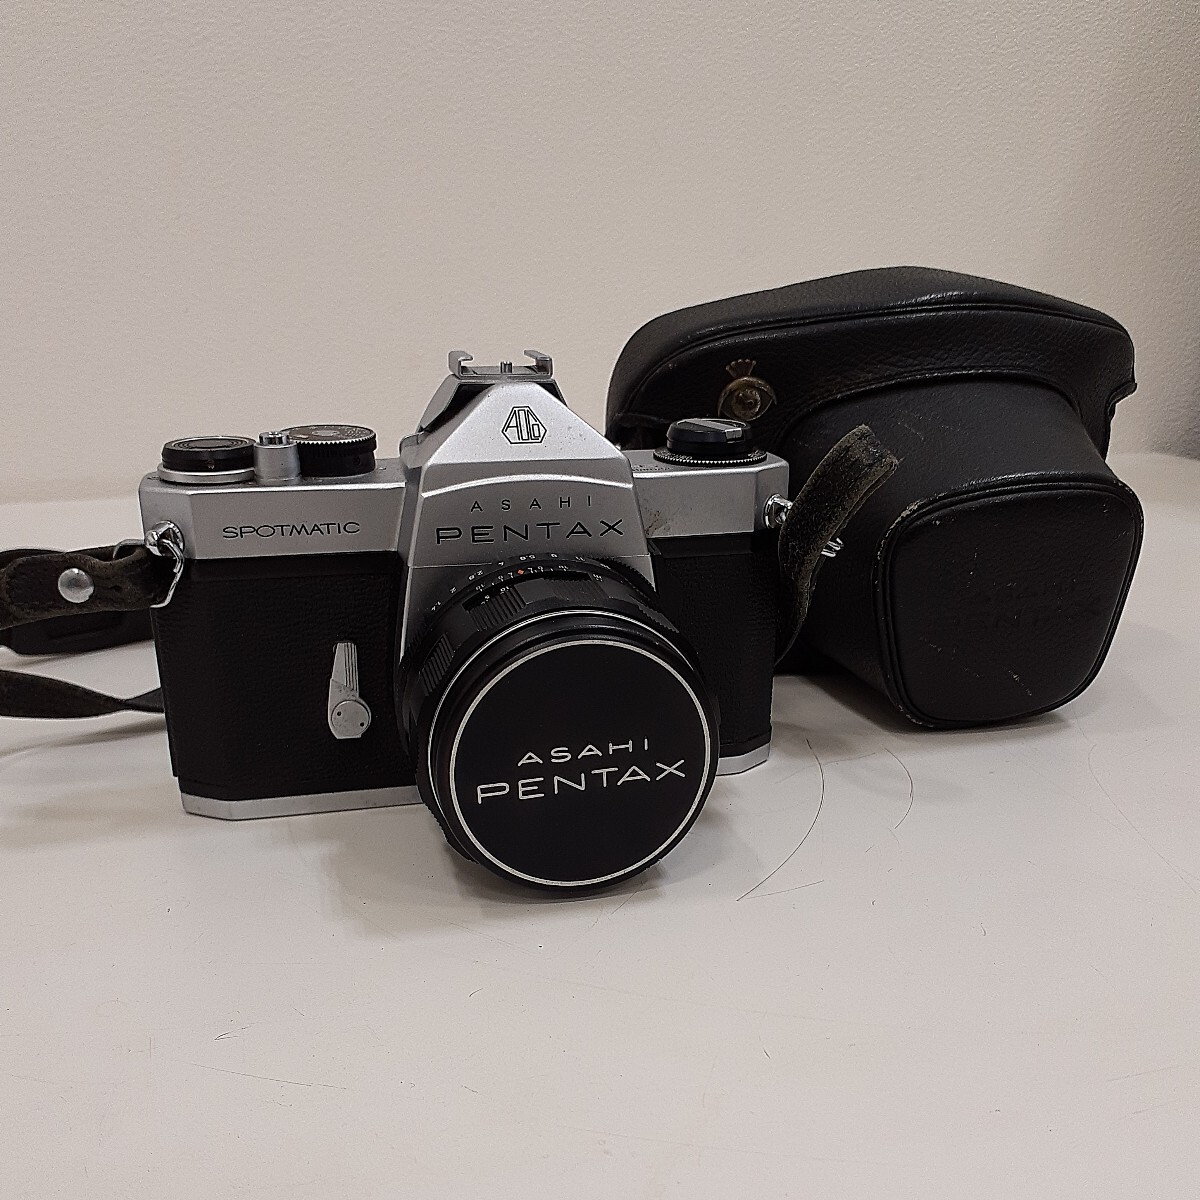 ASAHI PENTAX ペンタックス SPOTMATIC SP / SMC TAKUMAR 50mm F1.4 空シャッターOK フィルムカメラ 現状品の画像1